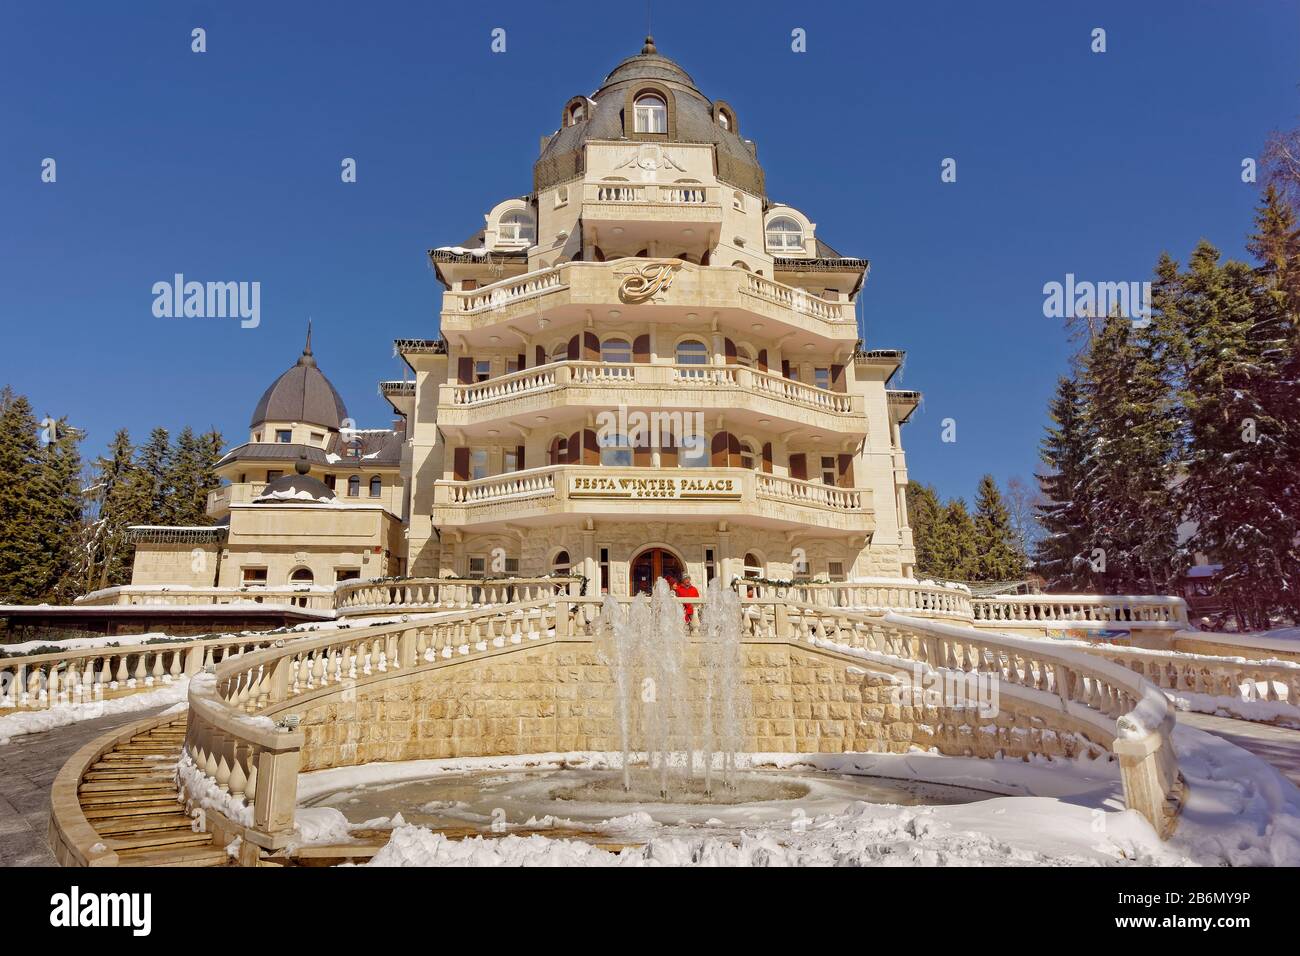 Festa Winter Palace Hotel, Borovets, Bulgarien. Stockfoto